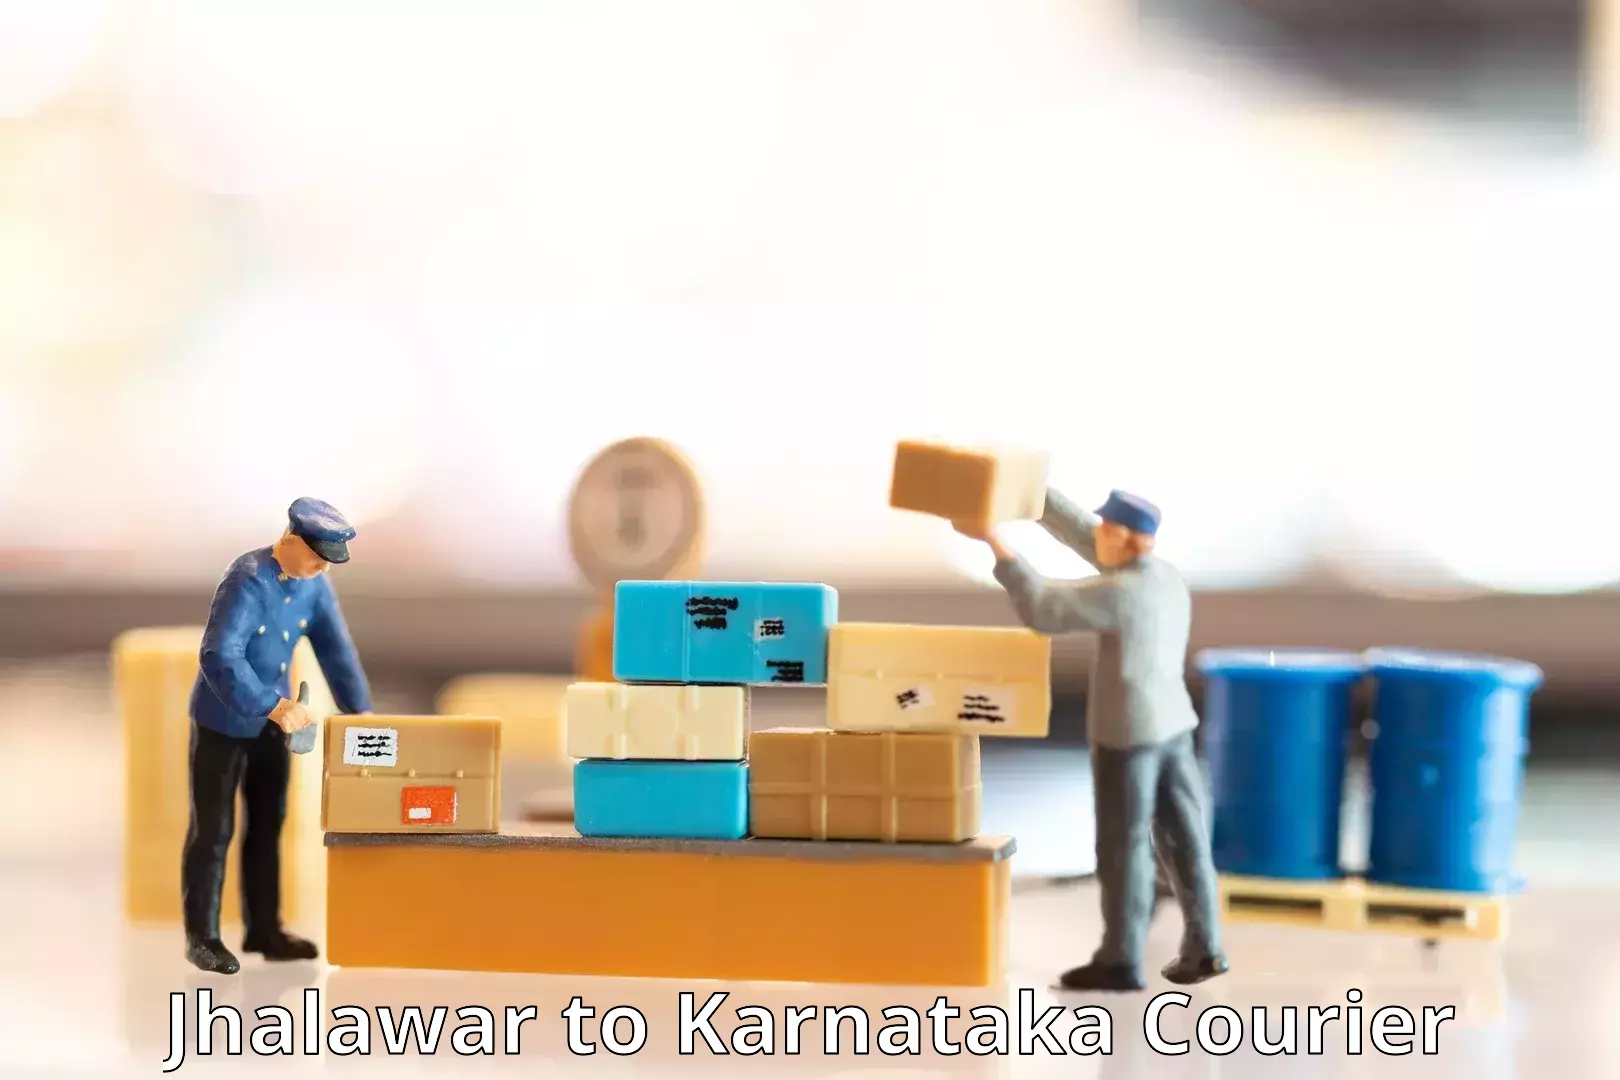 Express courier capabilities Jhalawar to Bangalore